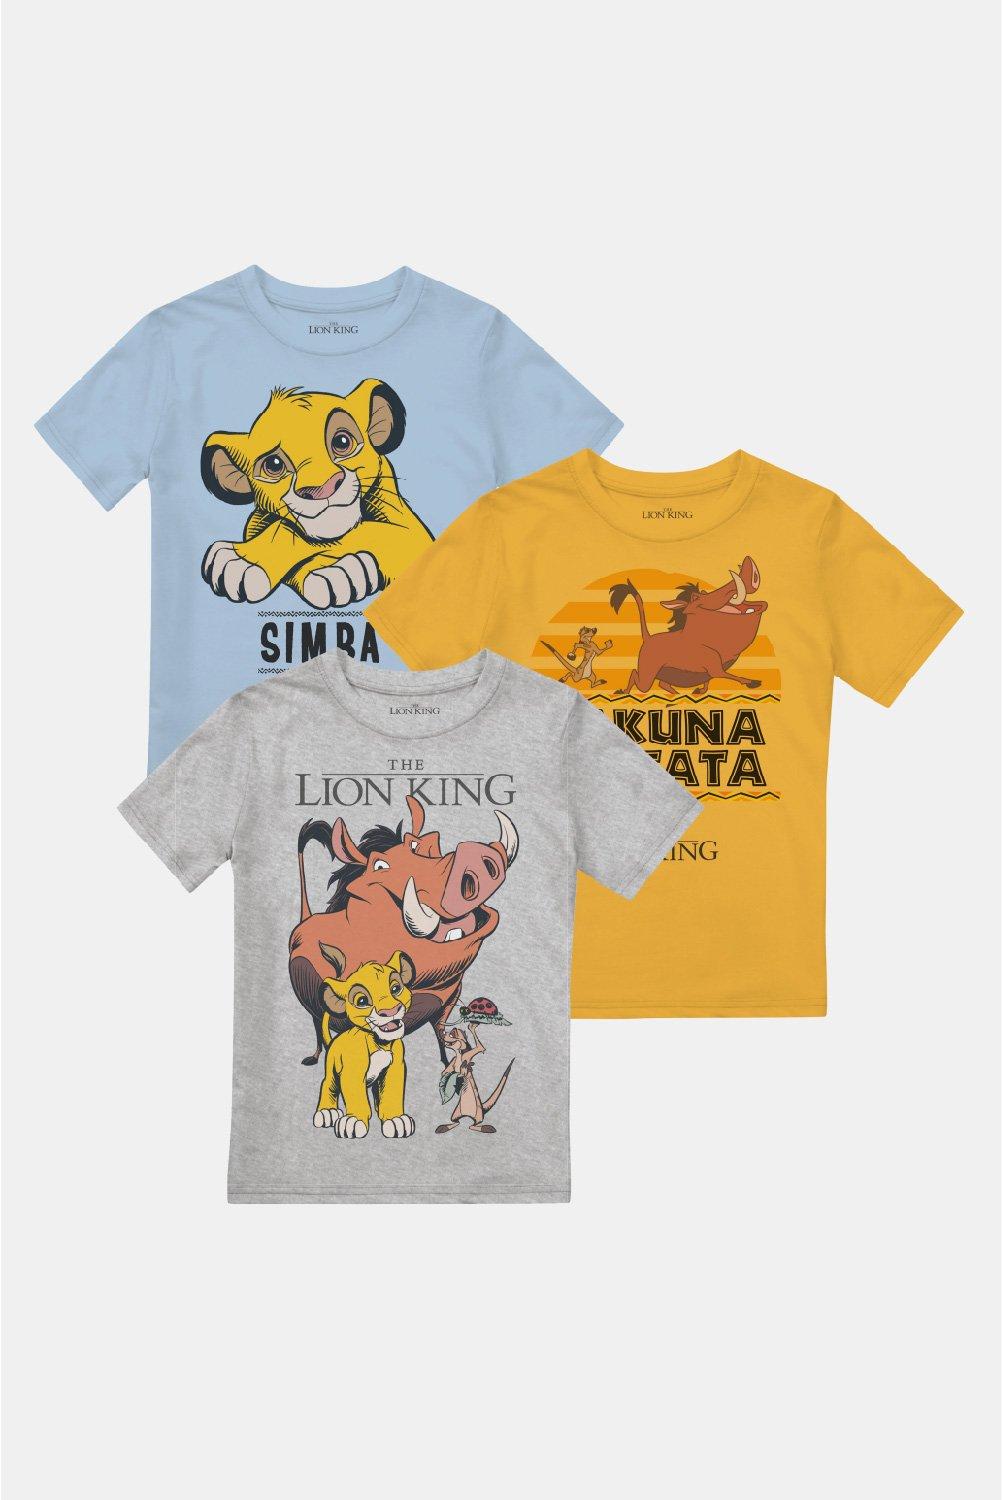 Комплект футболок для мальчиков «Король Лев Симба, Тимон и Пумба», 3 шт. Disney, мультиколор фигурка симба тимон и пумба беззаботная жизнь disney a27708 113 904742